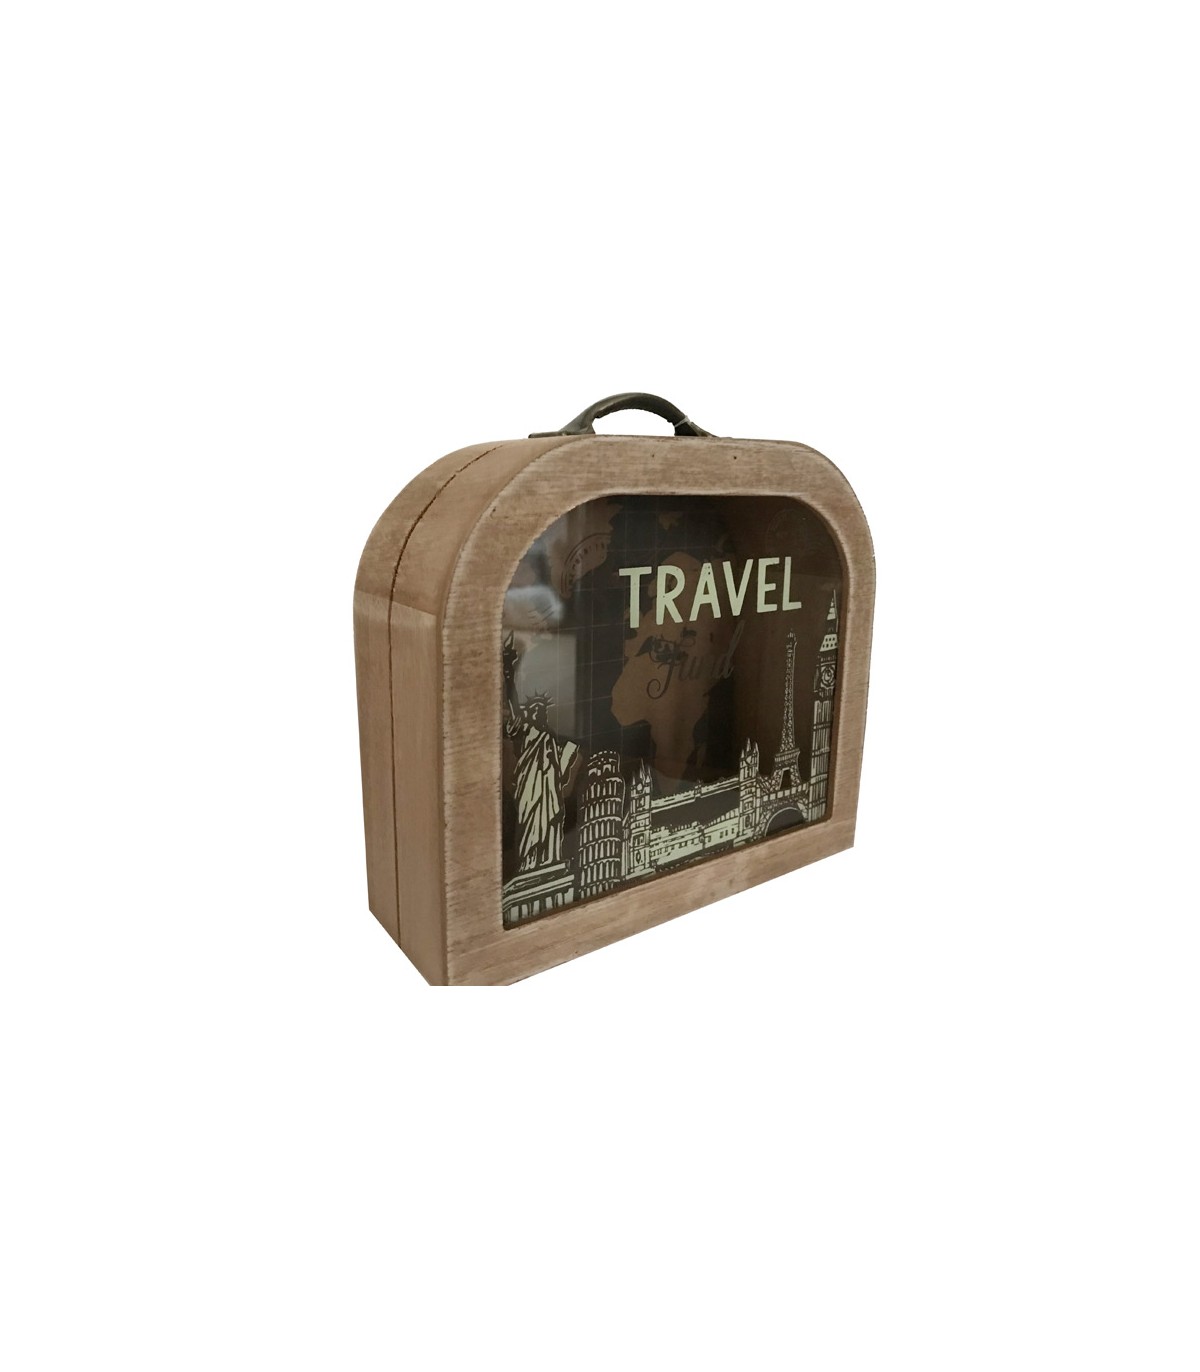 Tirelire ado Travel, tirelire originale en bois valisette